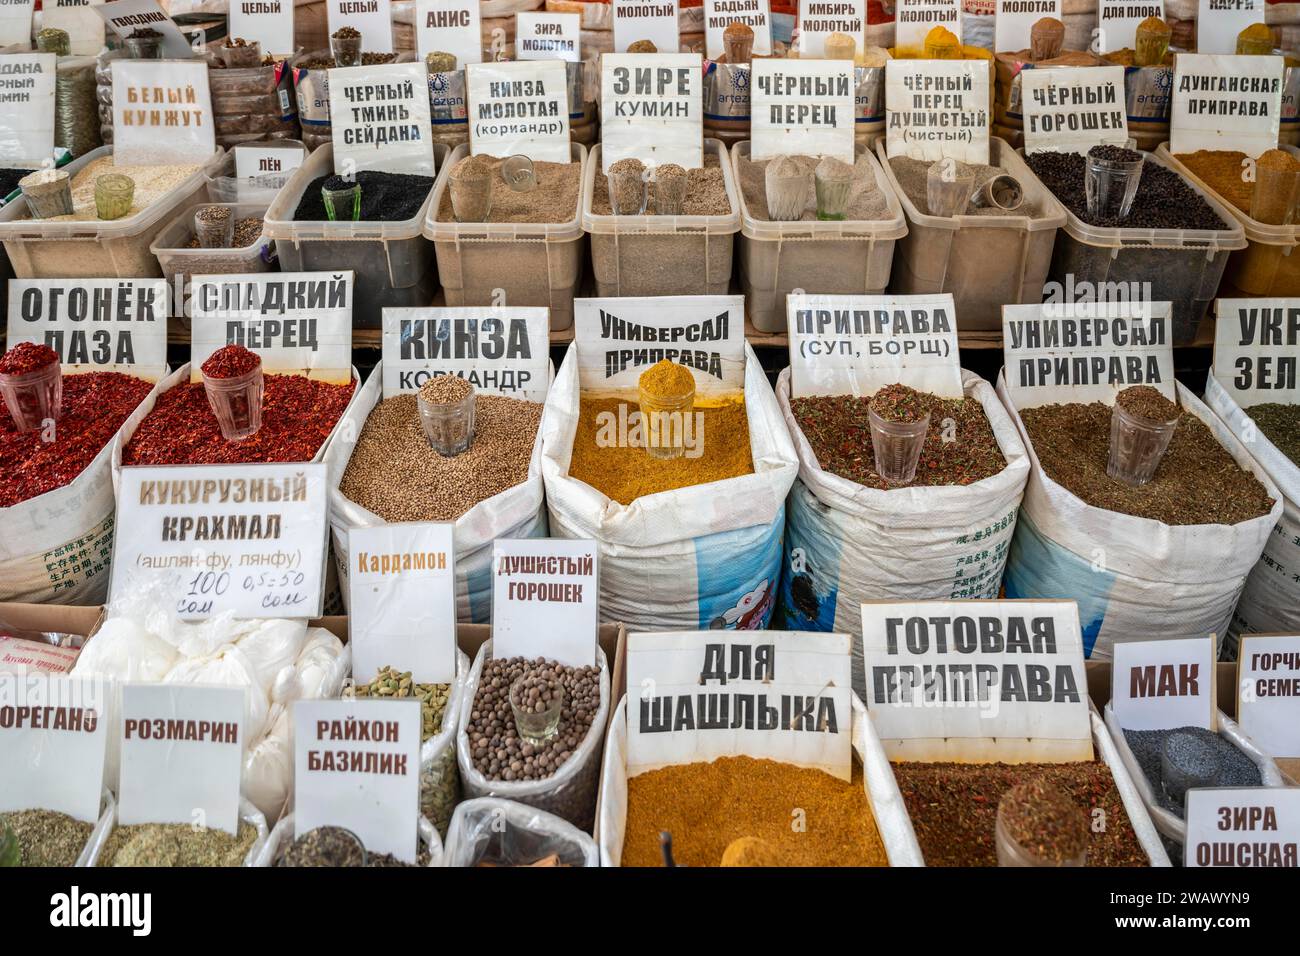 Varie spezie in una bancarella, Osh Bazaar, Bishkek, Kirghizistan Foto Stock